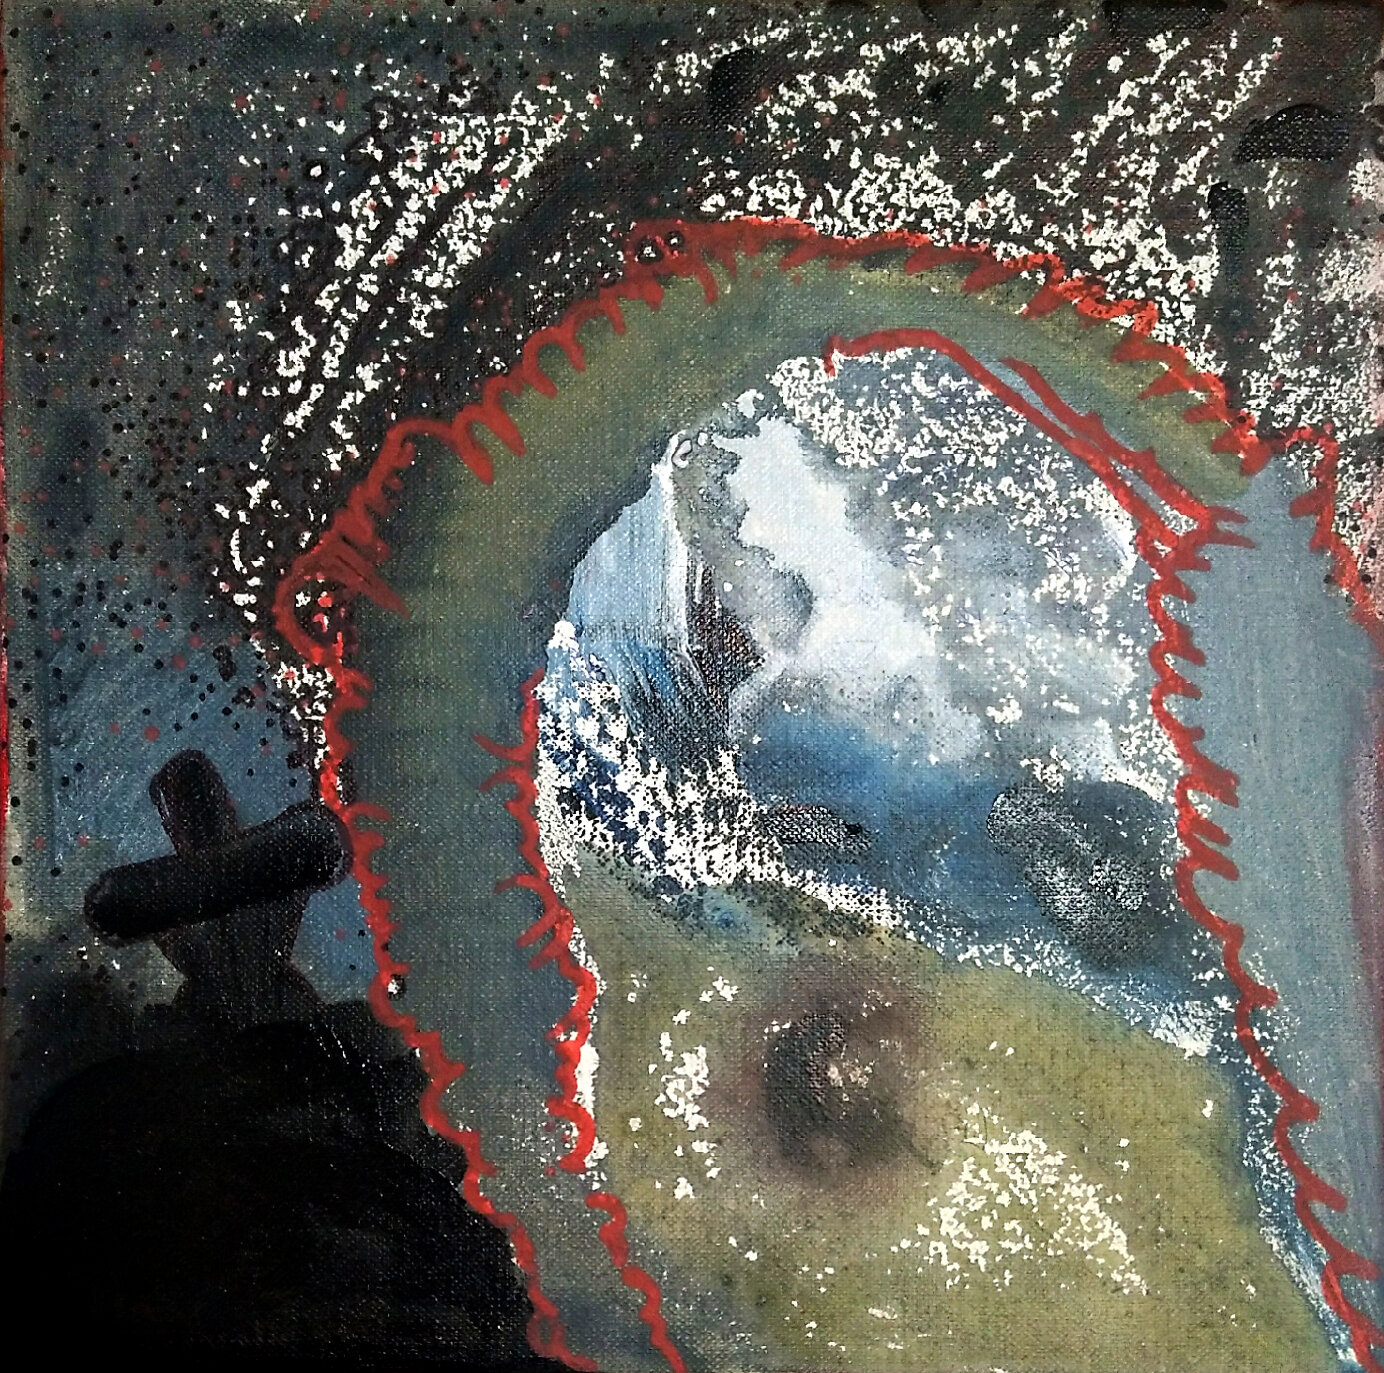 "Somewhere Over the Corona", 40x40cm, mixed media on canvas 